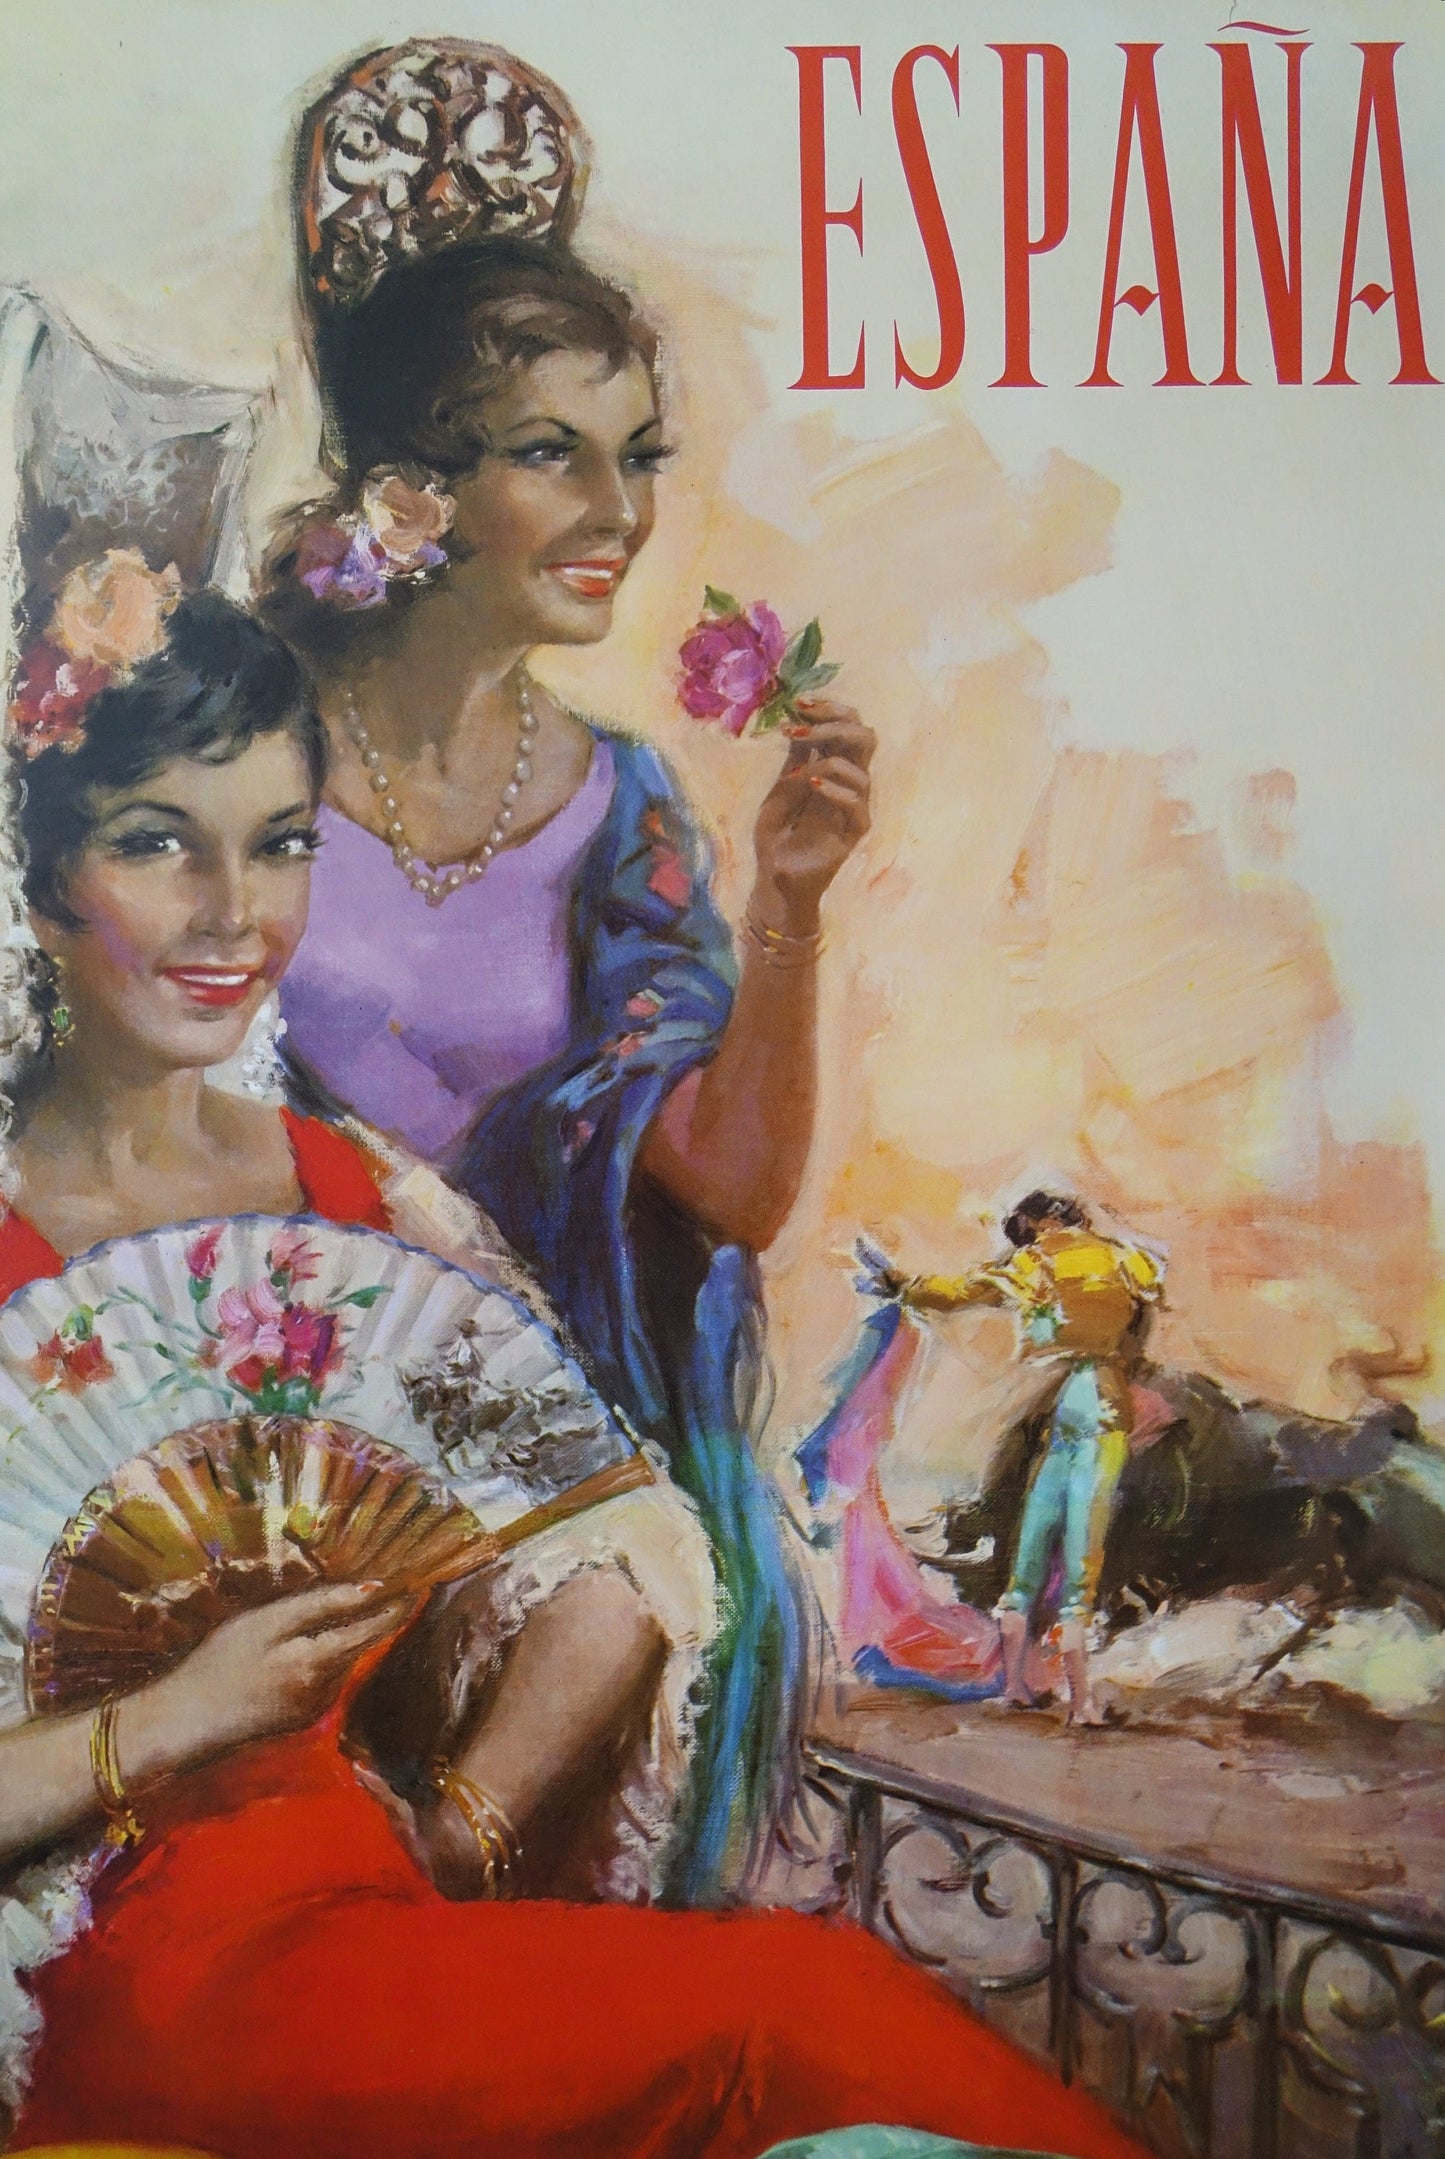 1962 Spanish Travel Poster - Original Vintage Poster